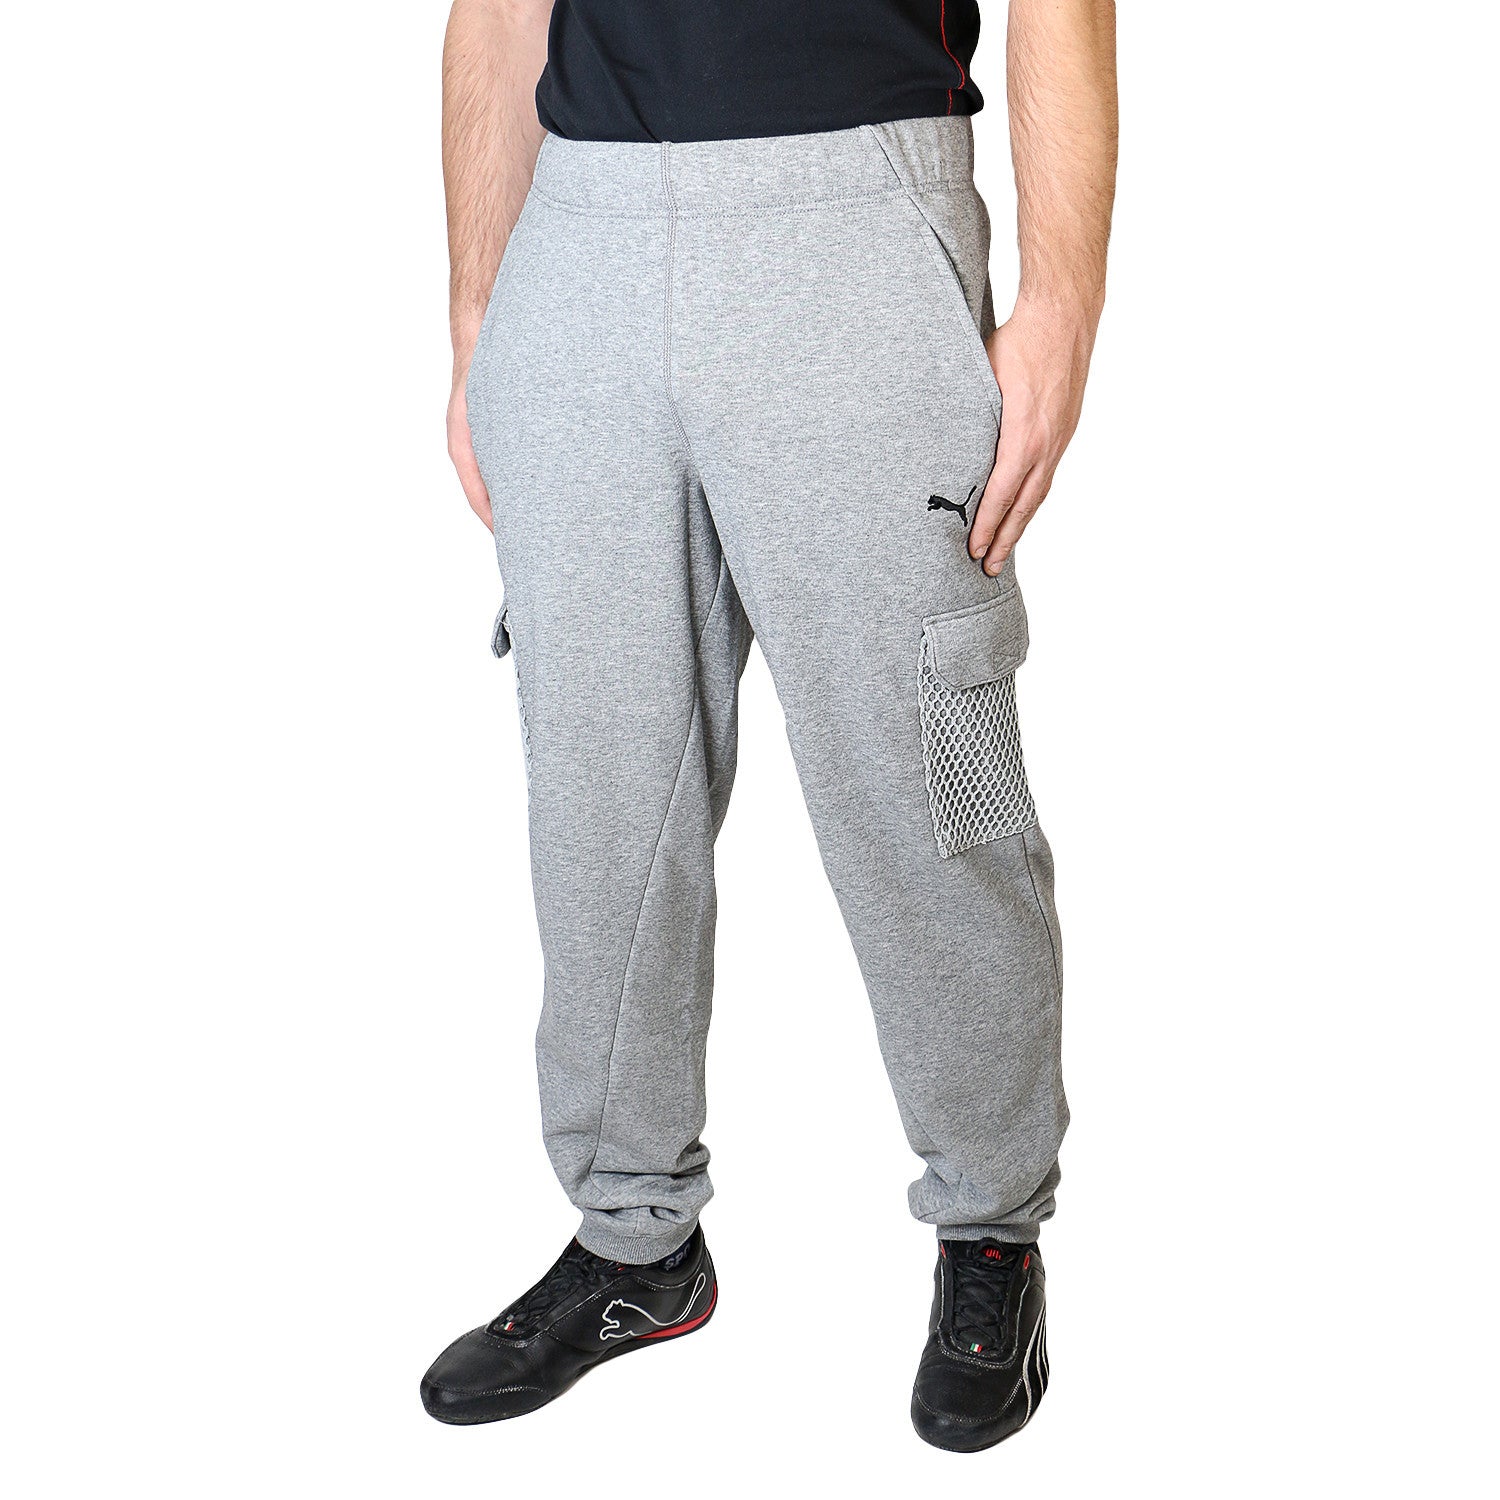 Large pants Puma Grey size M International in Cotton - 15984533